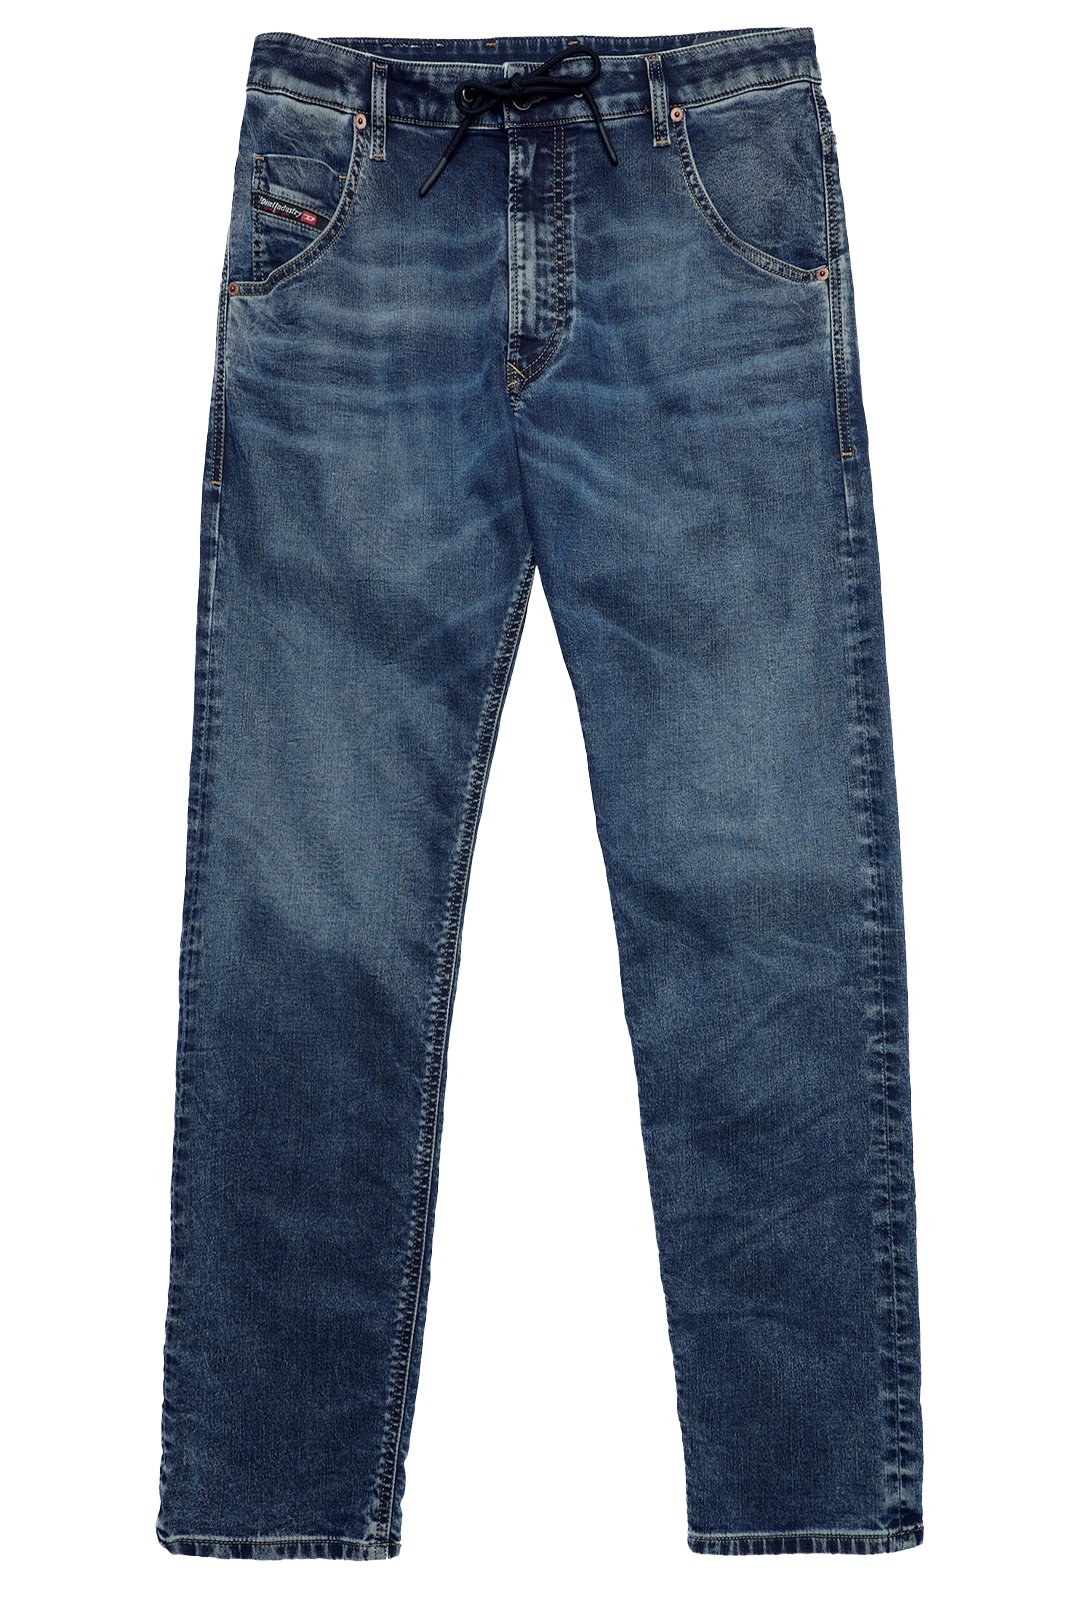 Jeans  Diesel KROOLEY 069VX